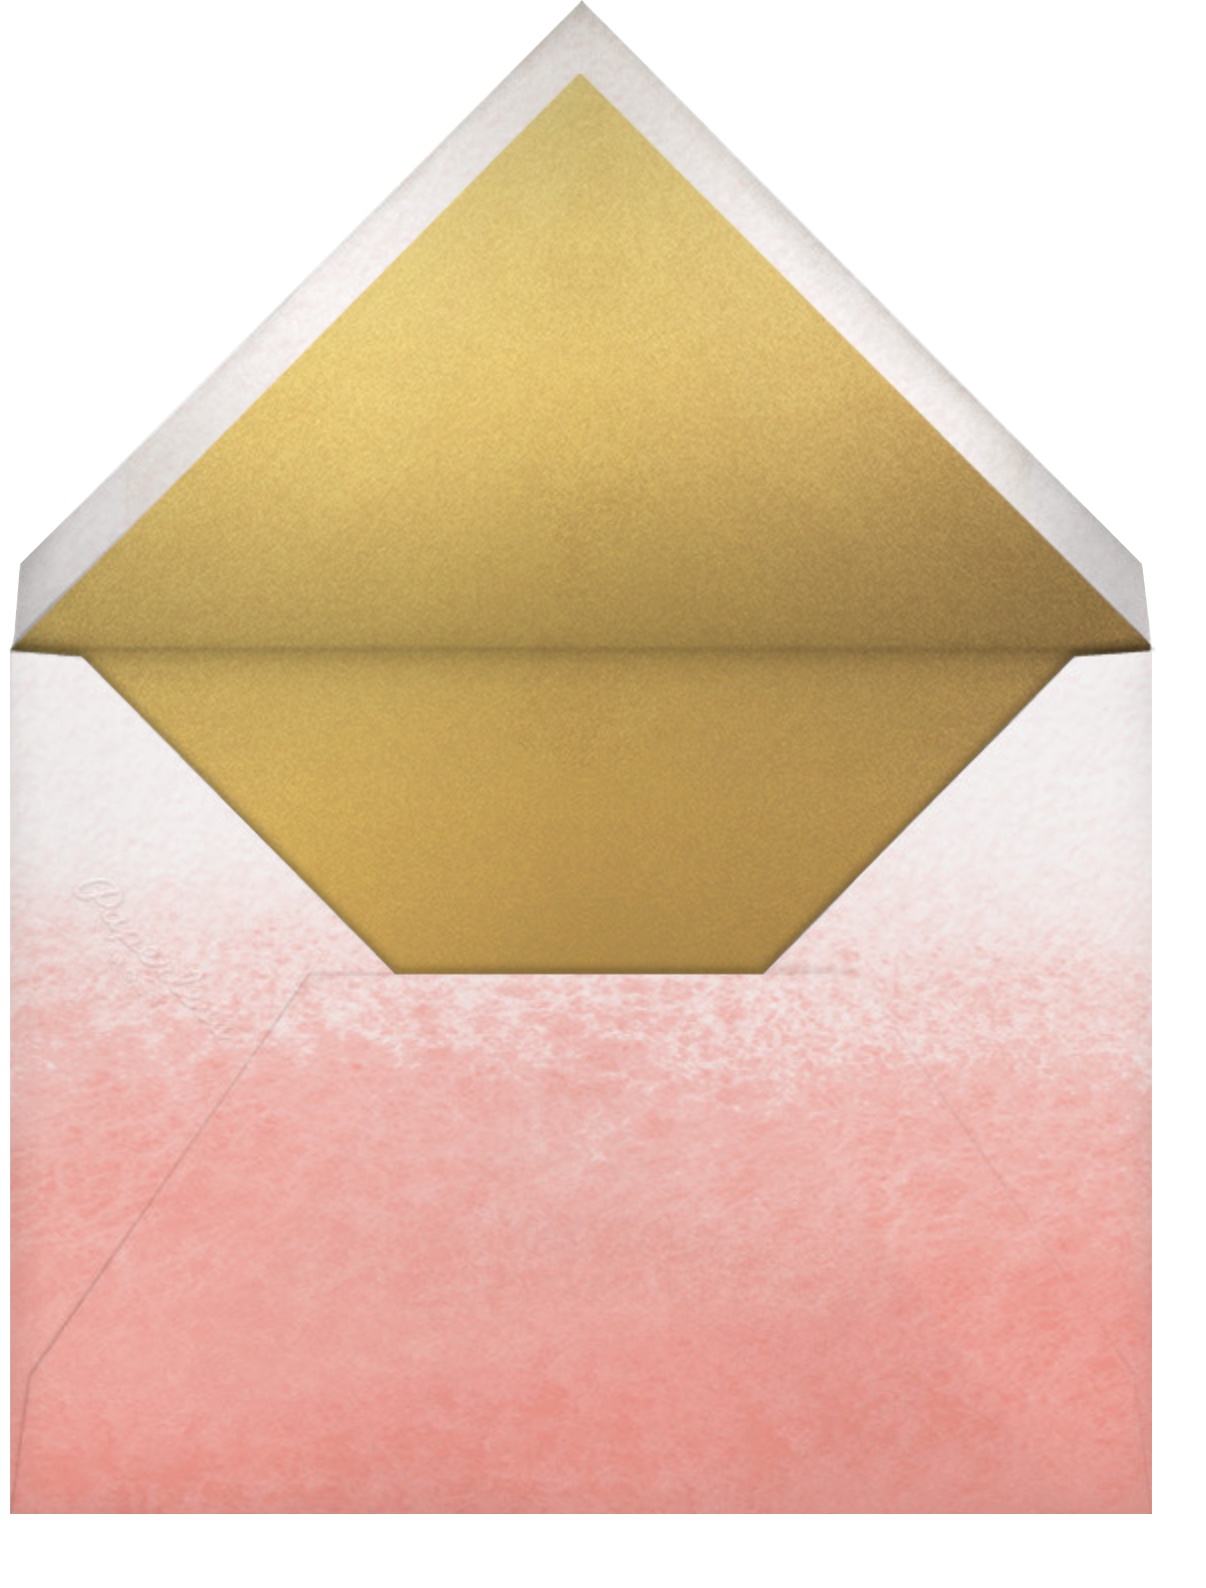 Mi Amor, Mi Vida - Paperless Post - Envelope